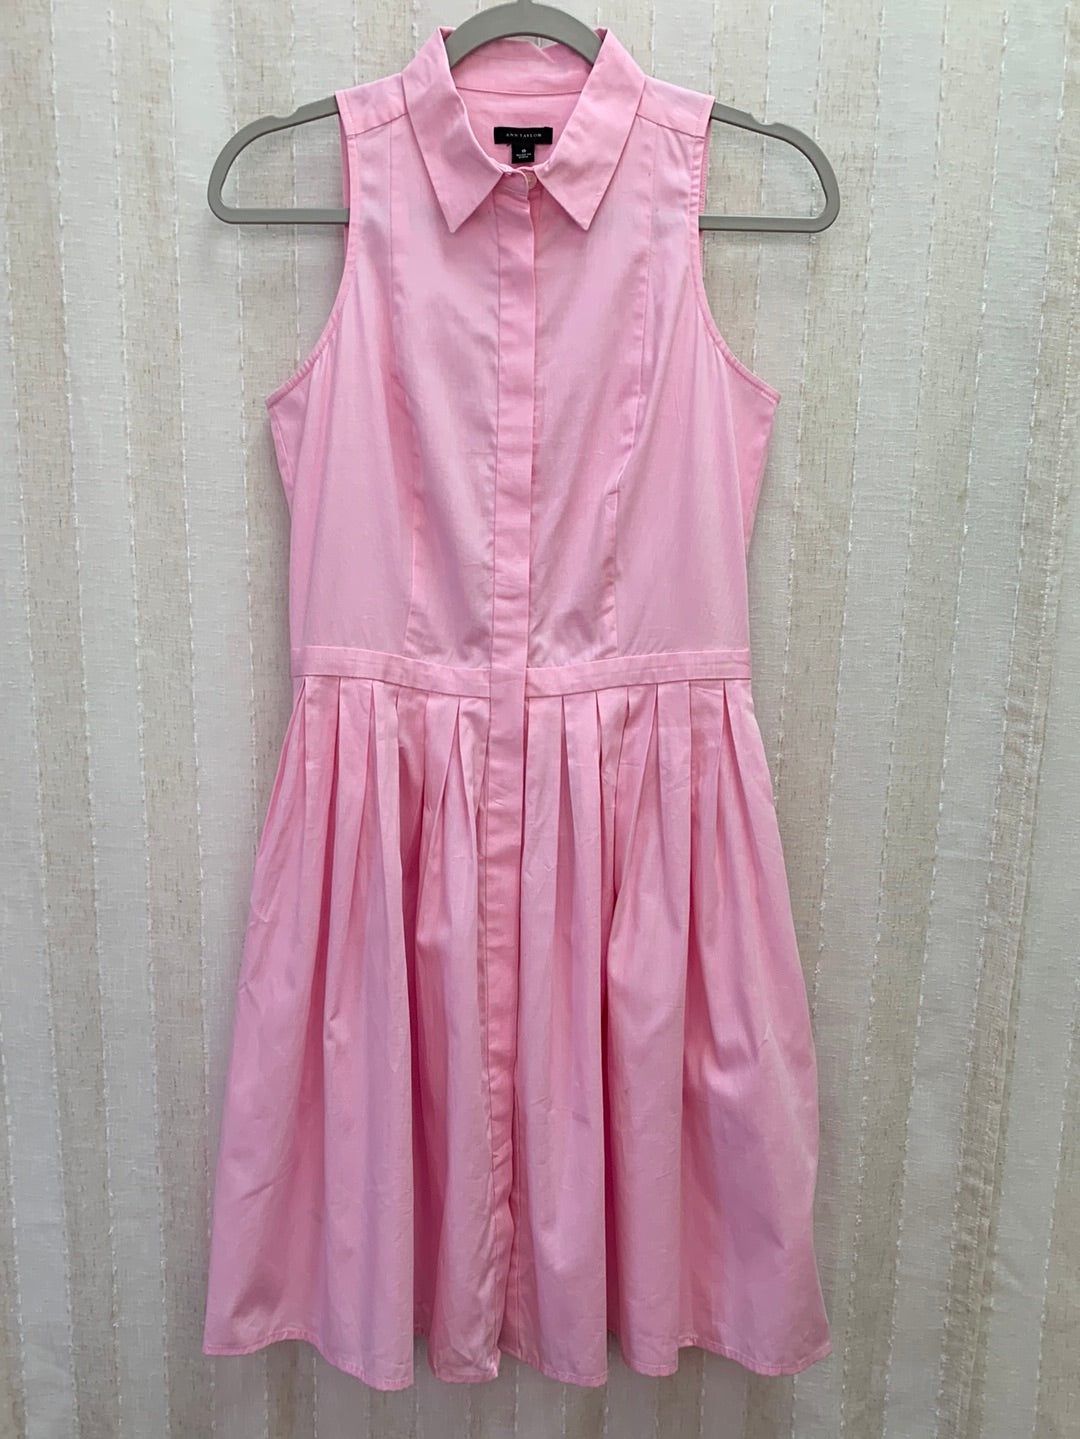 NWT - ANN TAYLOR pink Sleeveless Collar Pleated Button Shirt Dress - 0